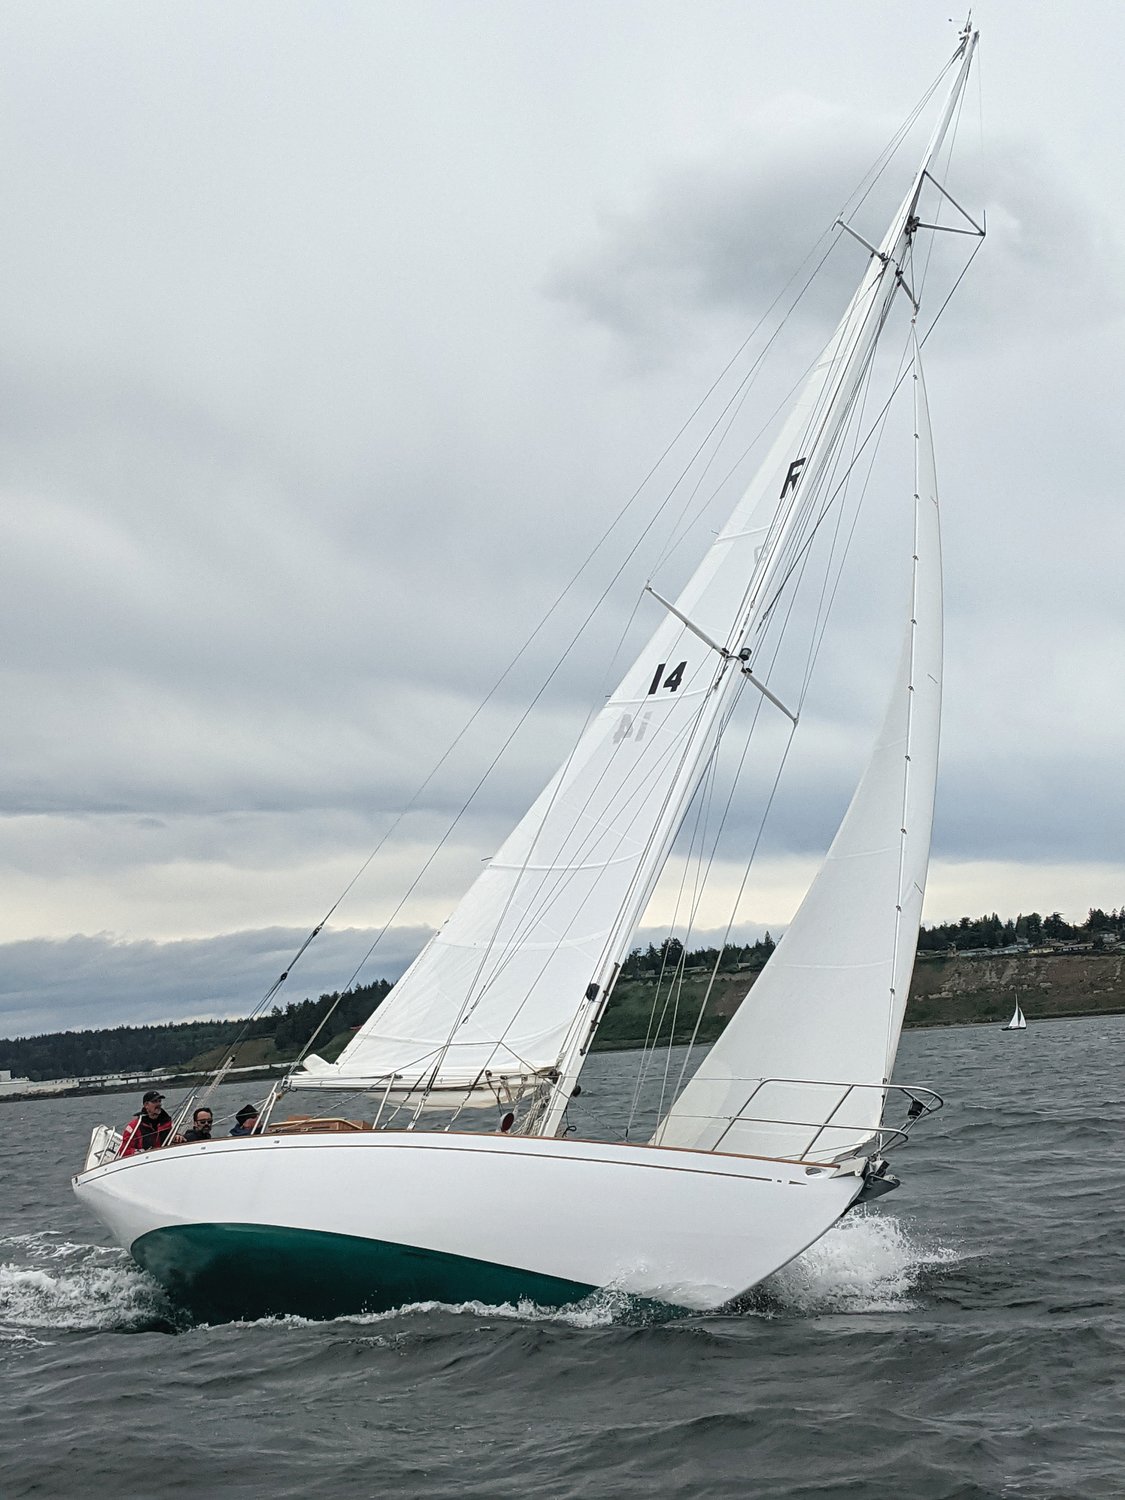 A sailboat tilts landward as the crew navigates Port Townsend Bay during Saturday’s race.